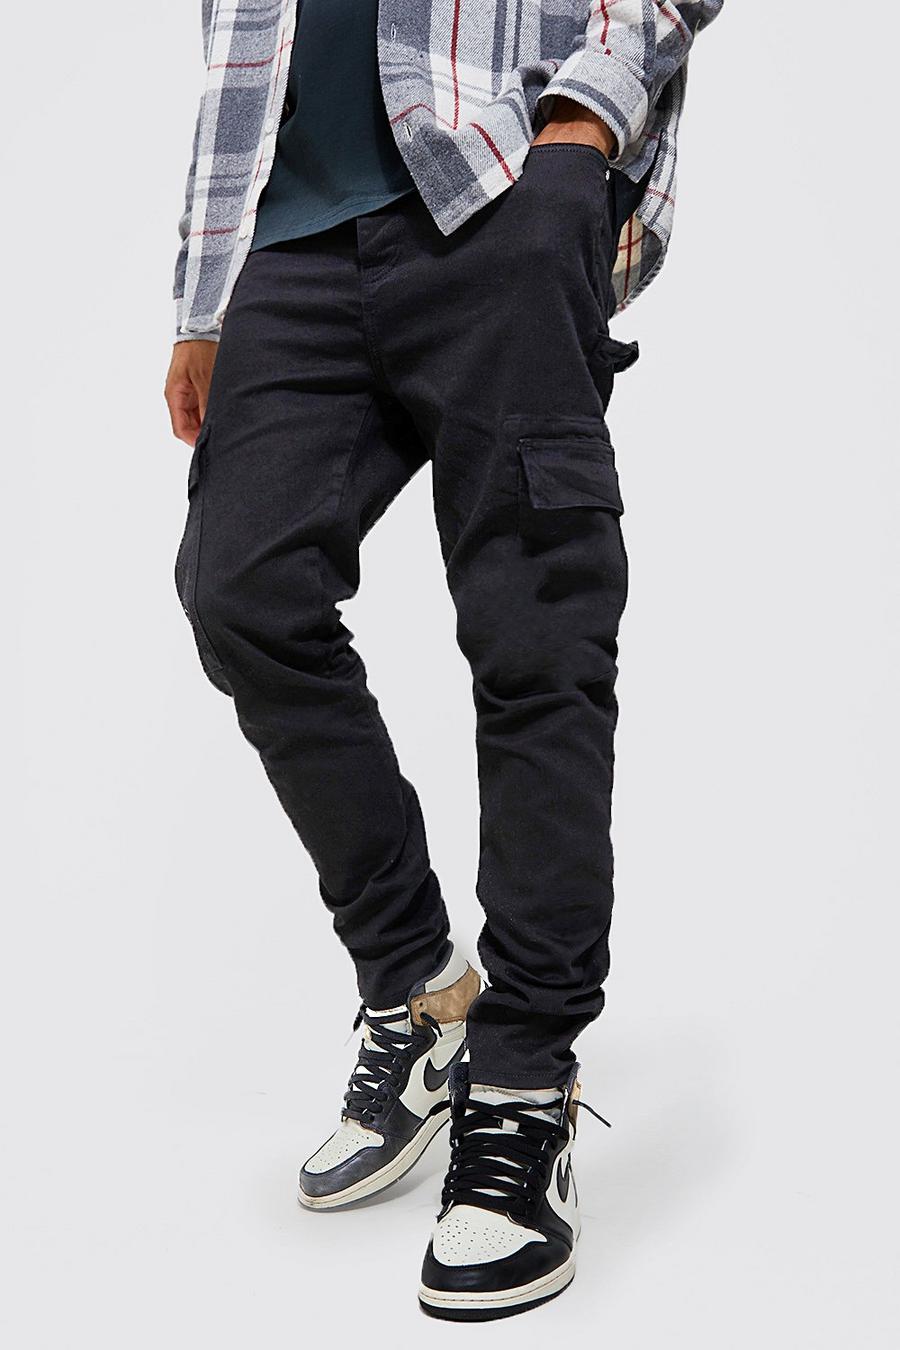 Jeans Cargo stile Carpenter Tall Skinny Fit Stretch , Black nero